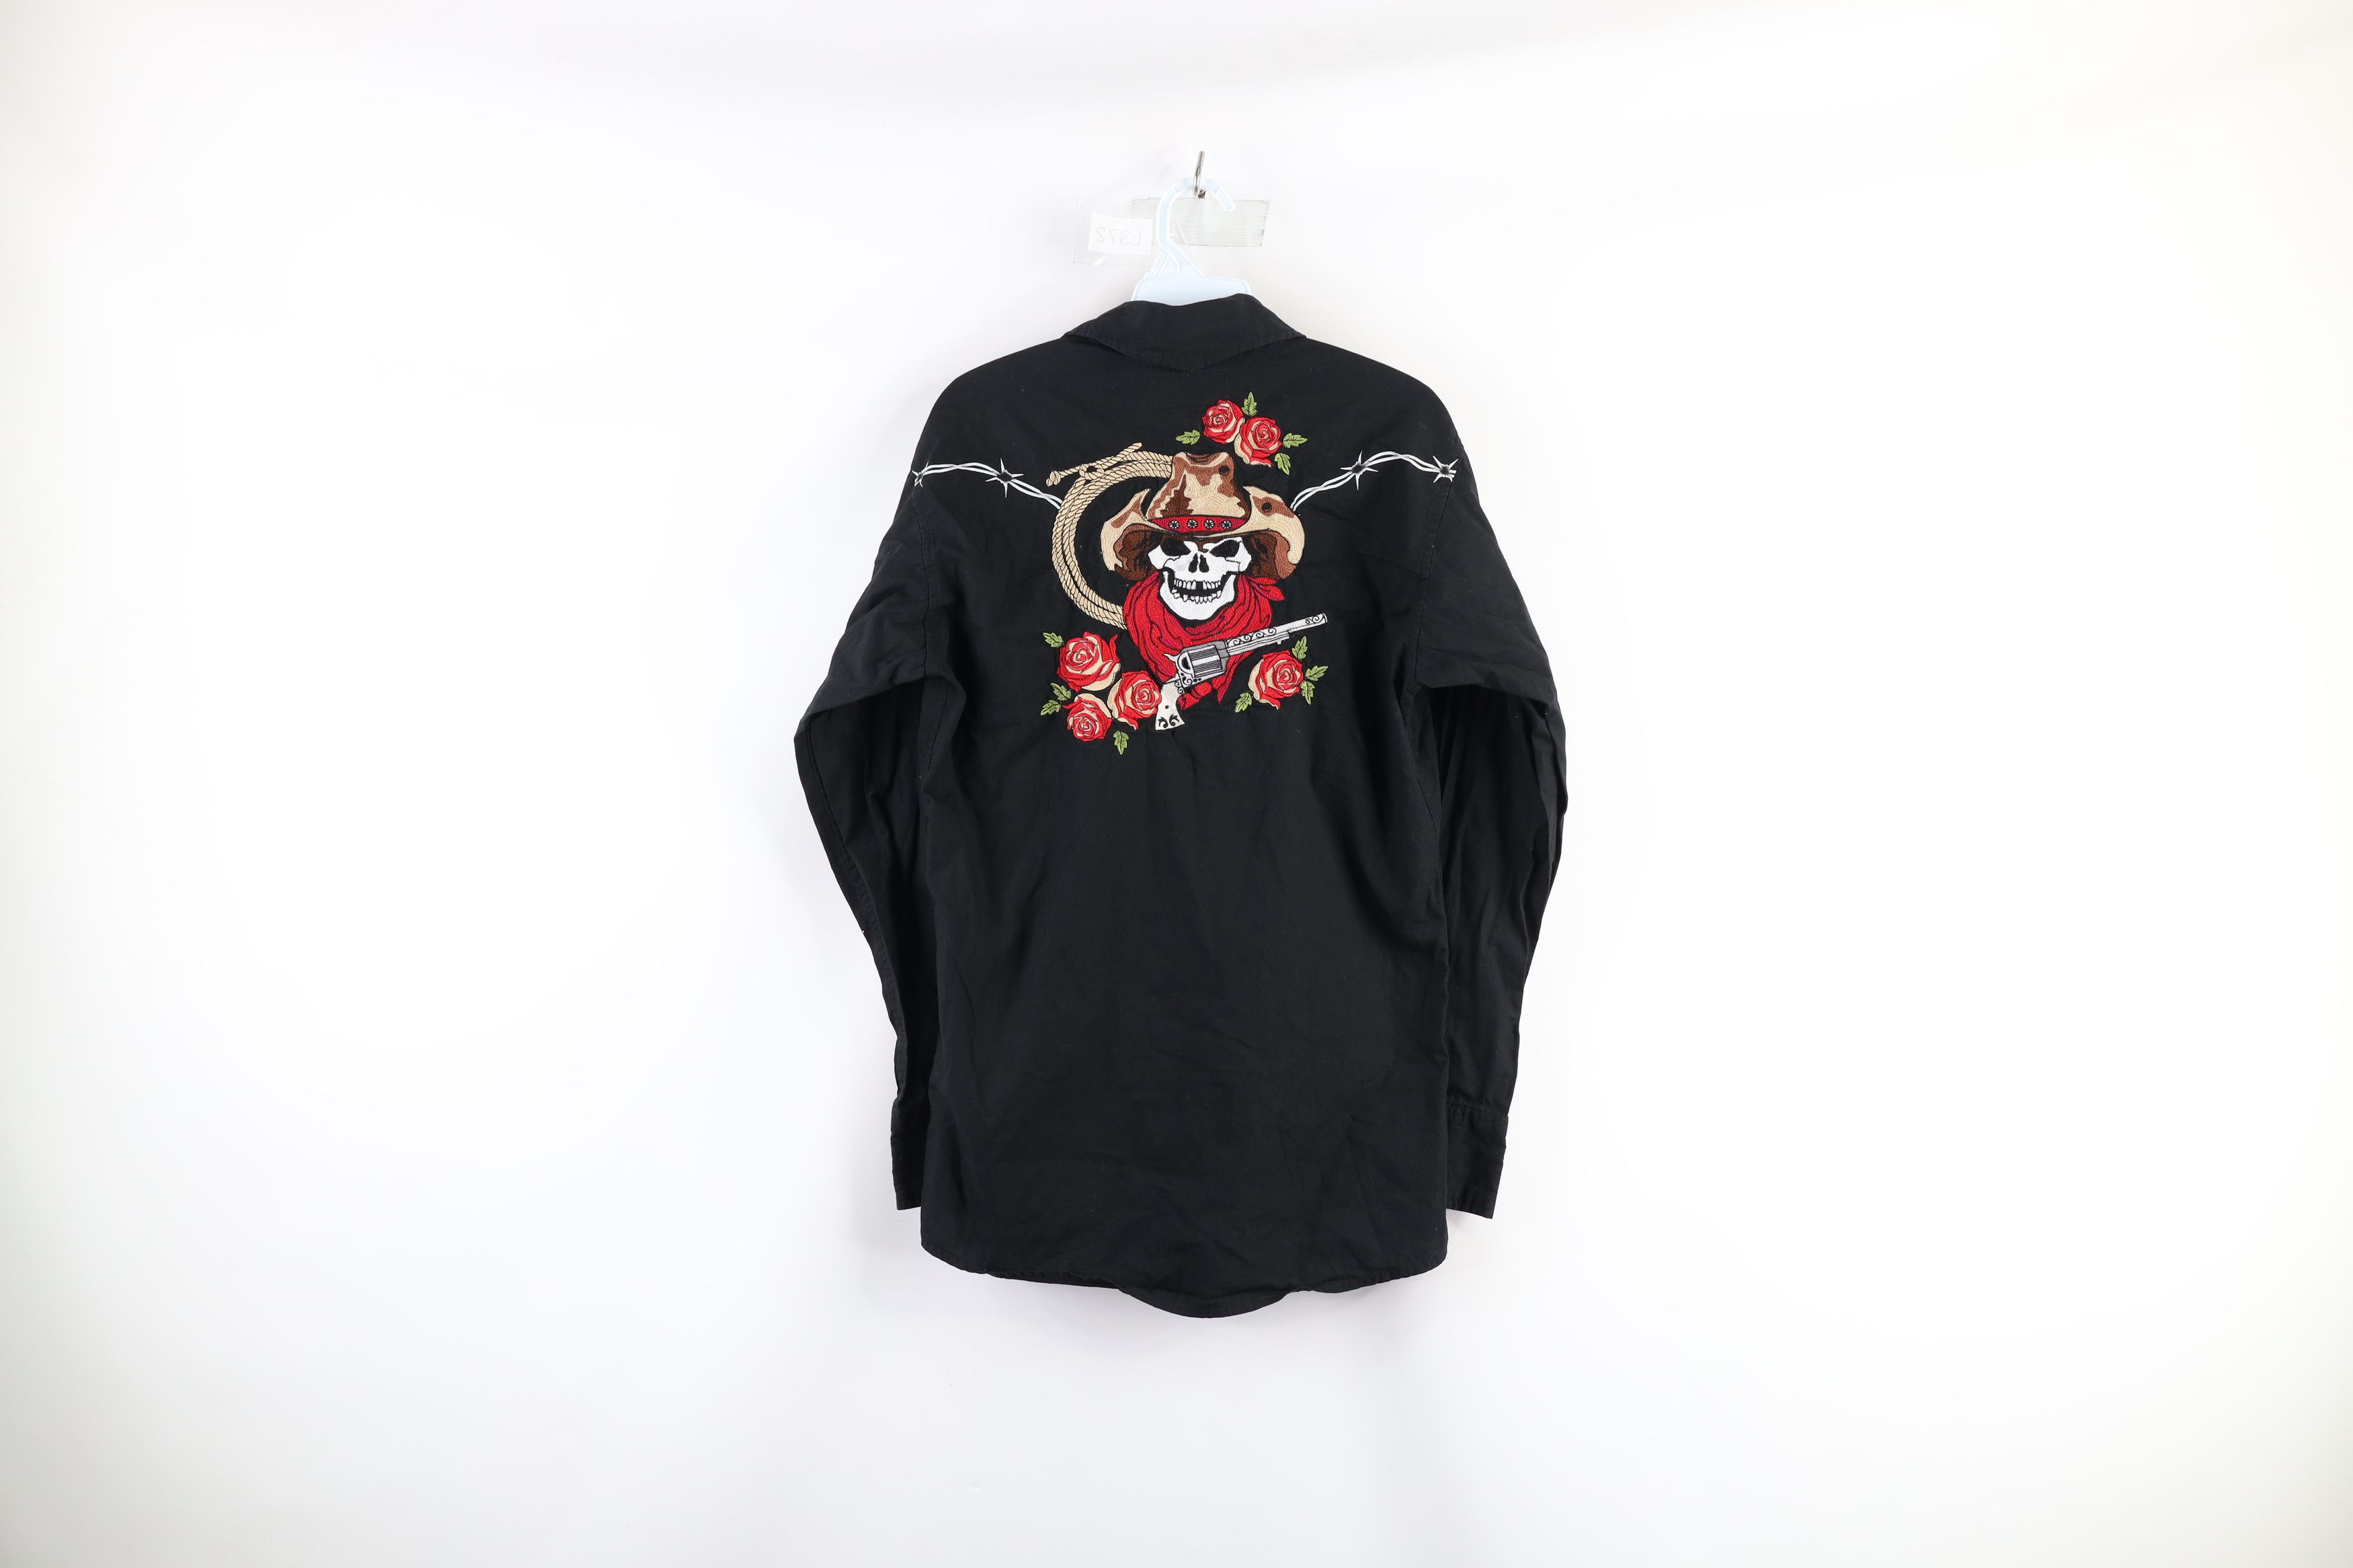 Vintage Vintage Rockabilly Rose Skull Snap Button Shirt Black Size US S / EU 44-46 / 1 - 9 Thumbnail